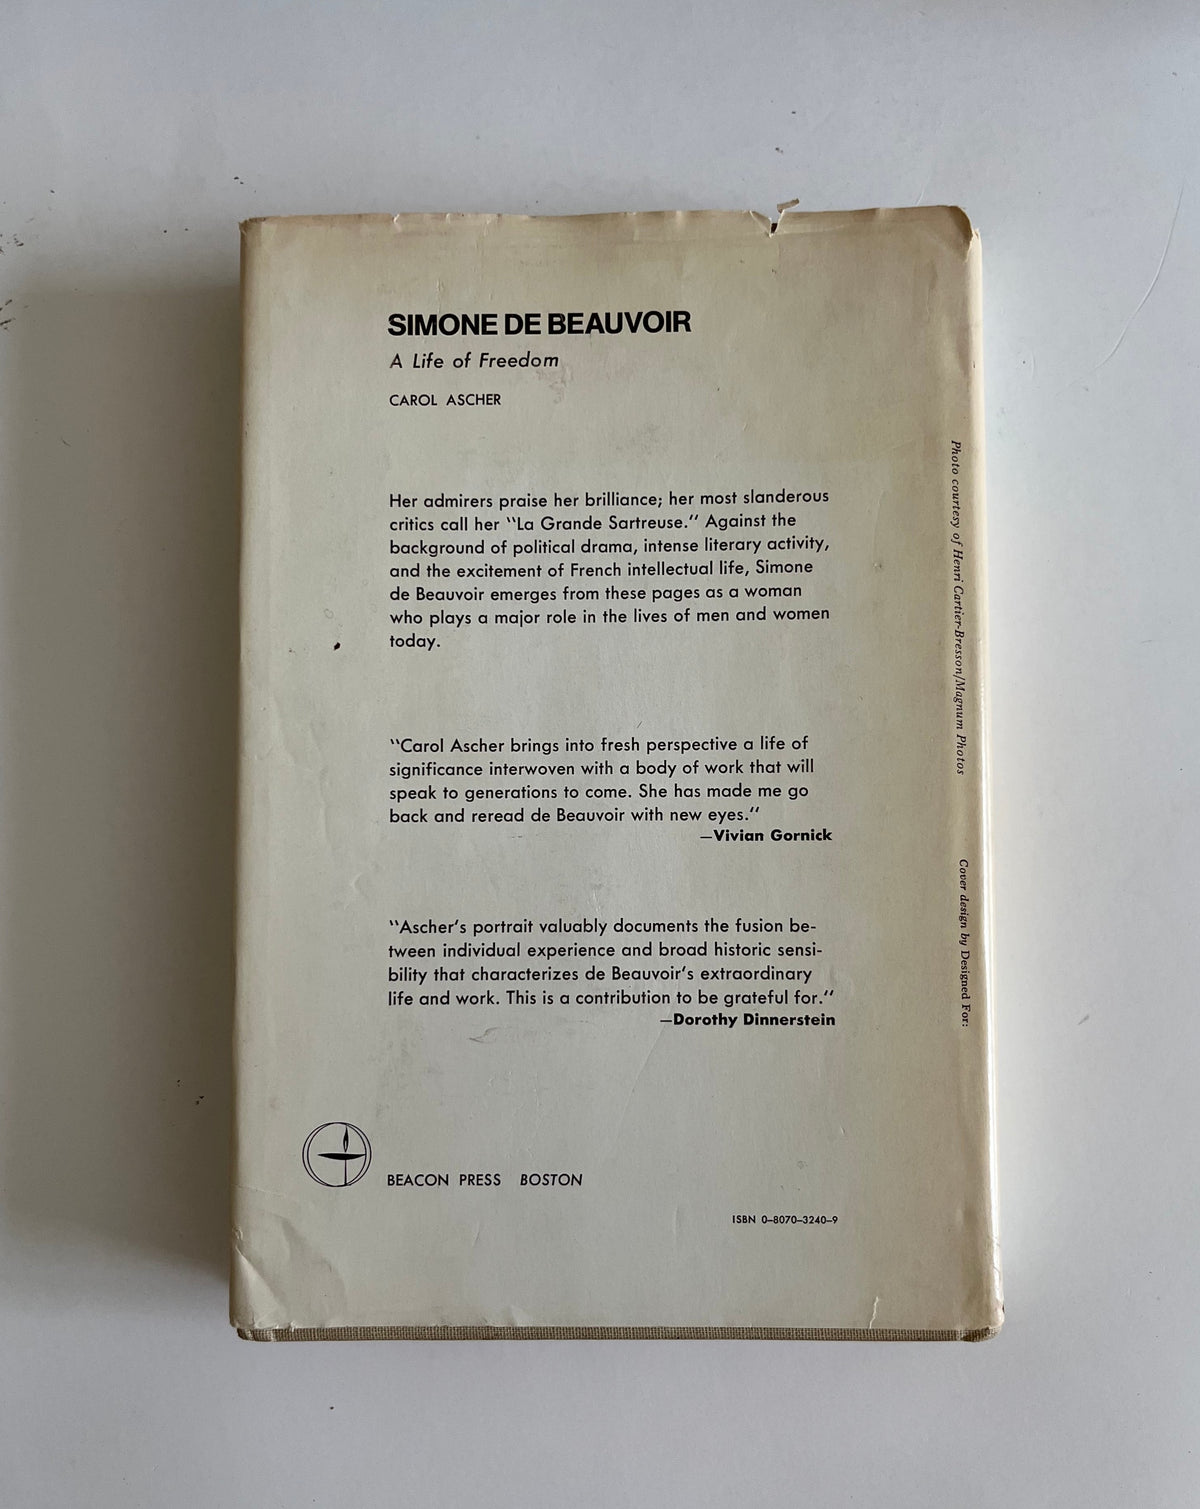 Simone de Beauvoir: A Life of Freedom by Carol Ascher